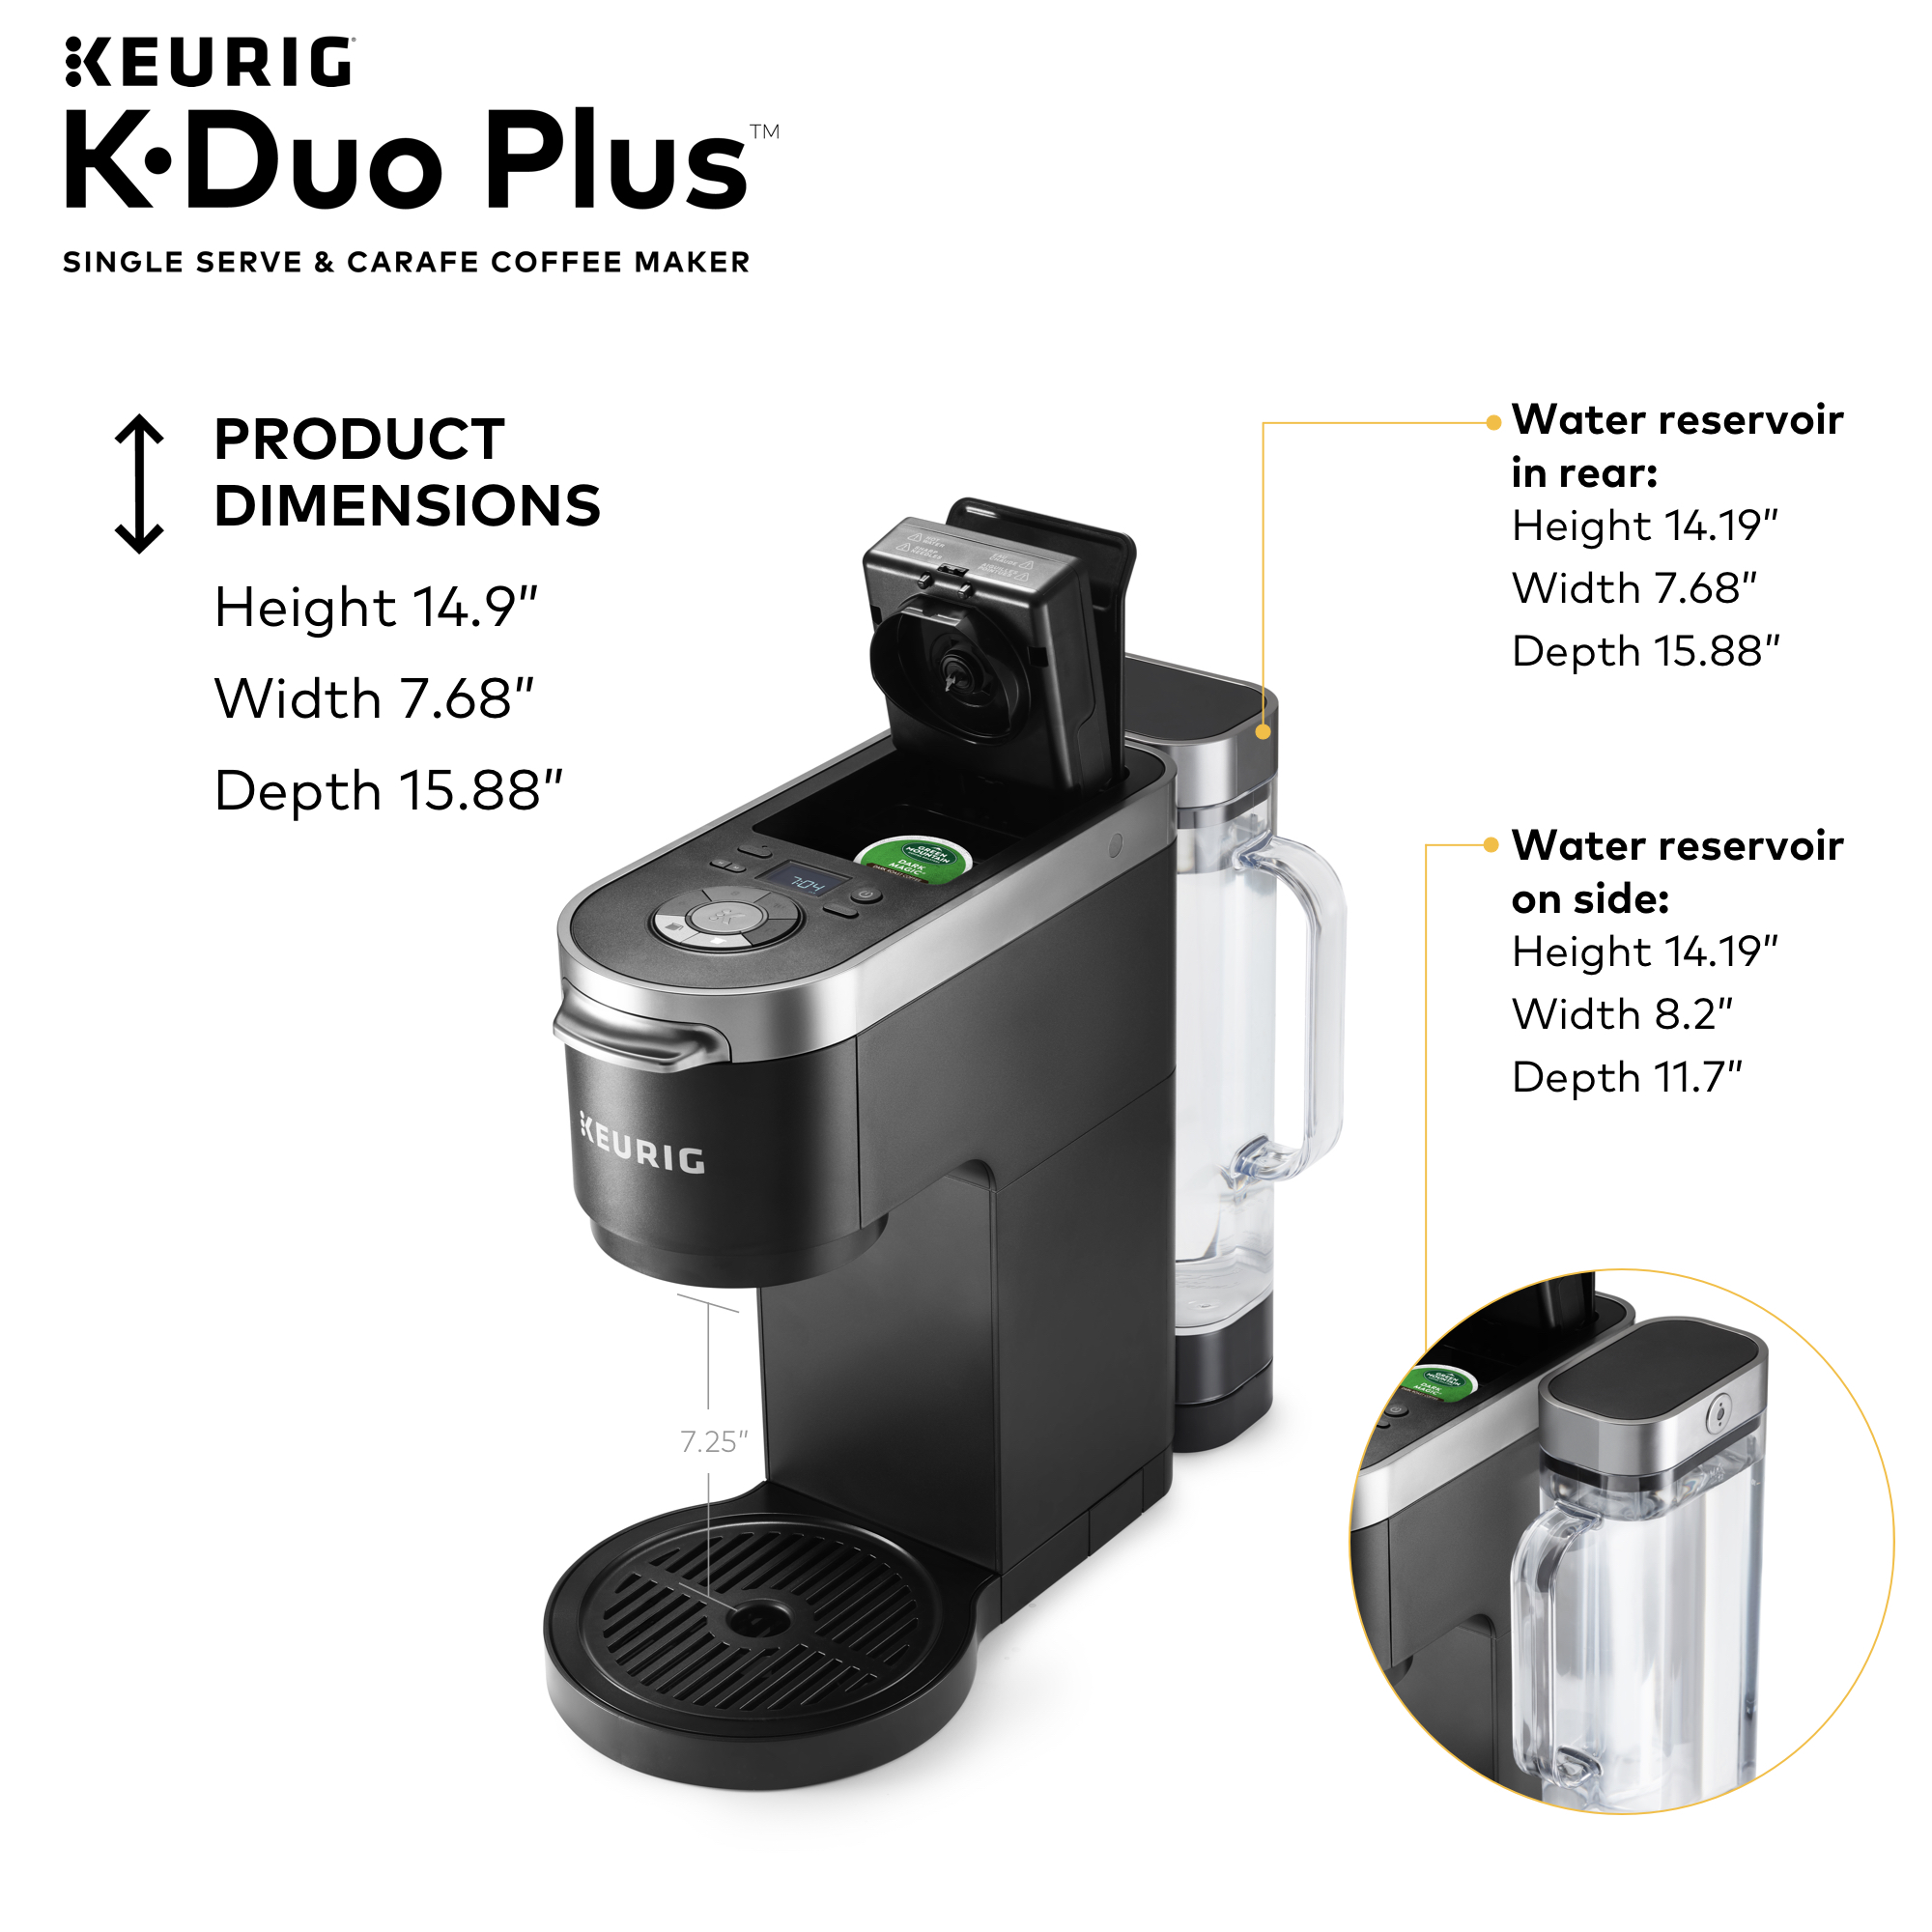 Keurig K-Duo Plus Single Serve & Carafe Coffee Maker - image 3 of 24